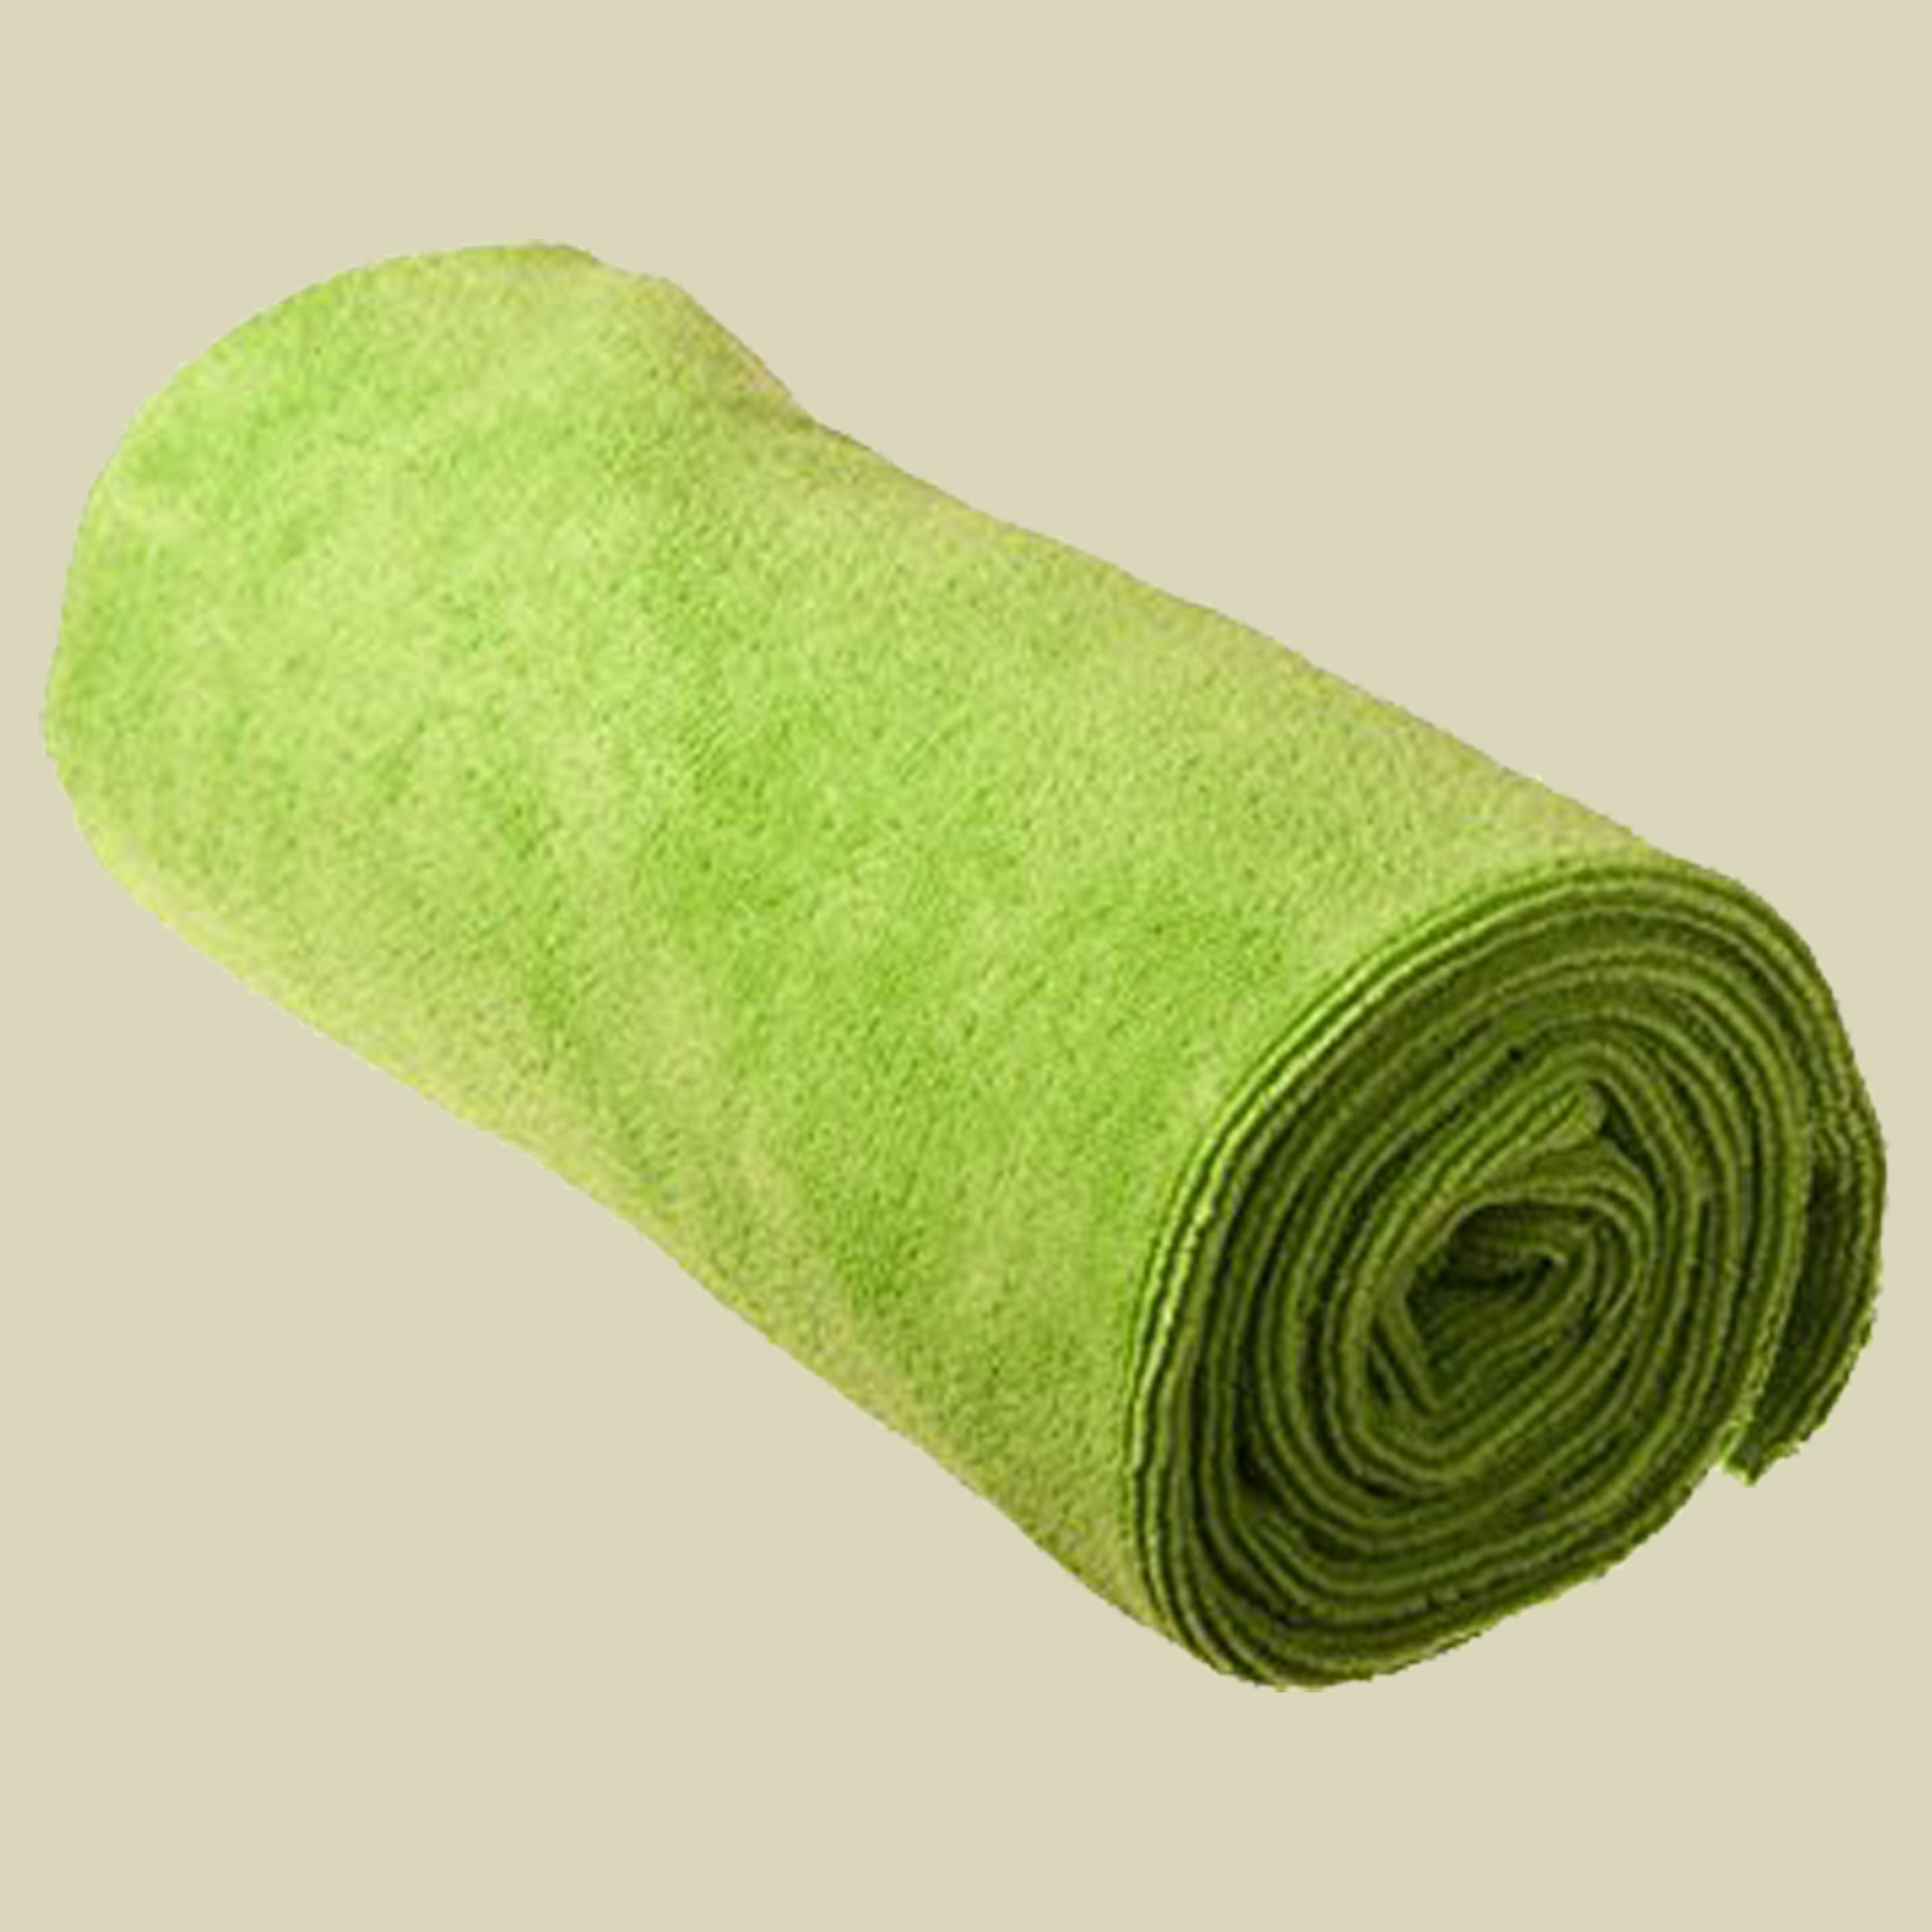 TEK Towel Größe XS Farbe lime